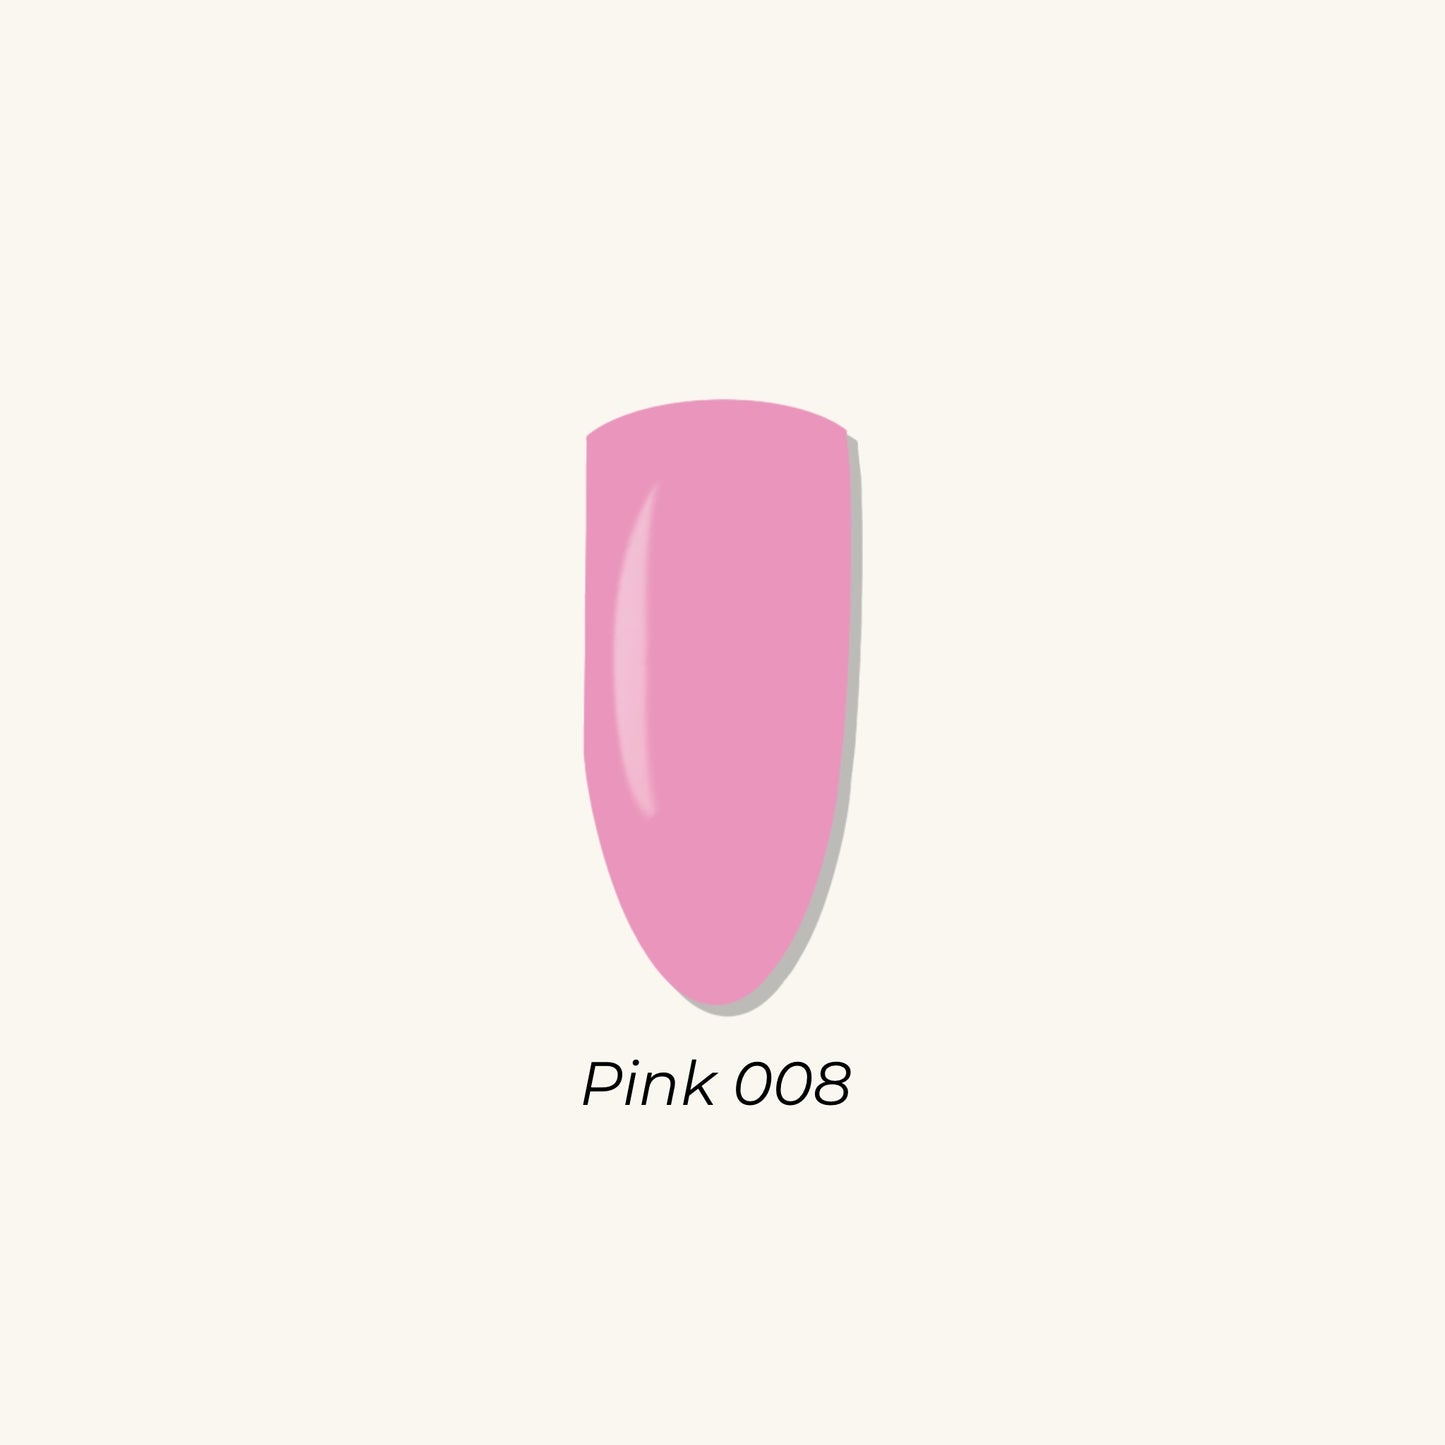 Pink 008